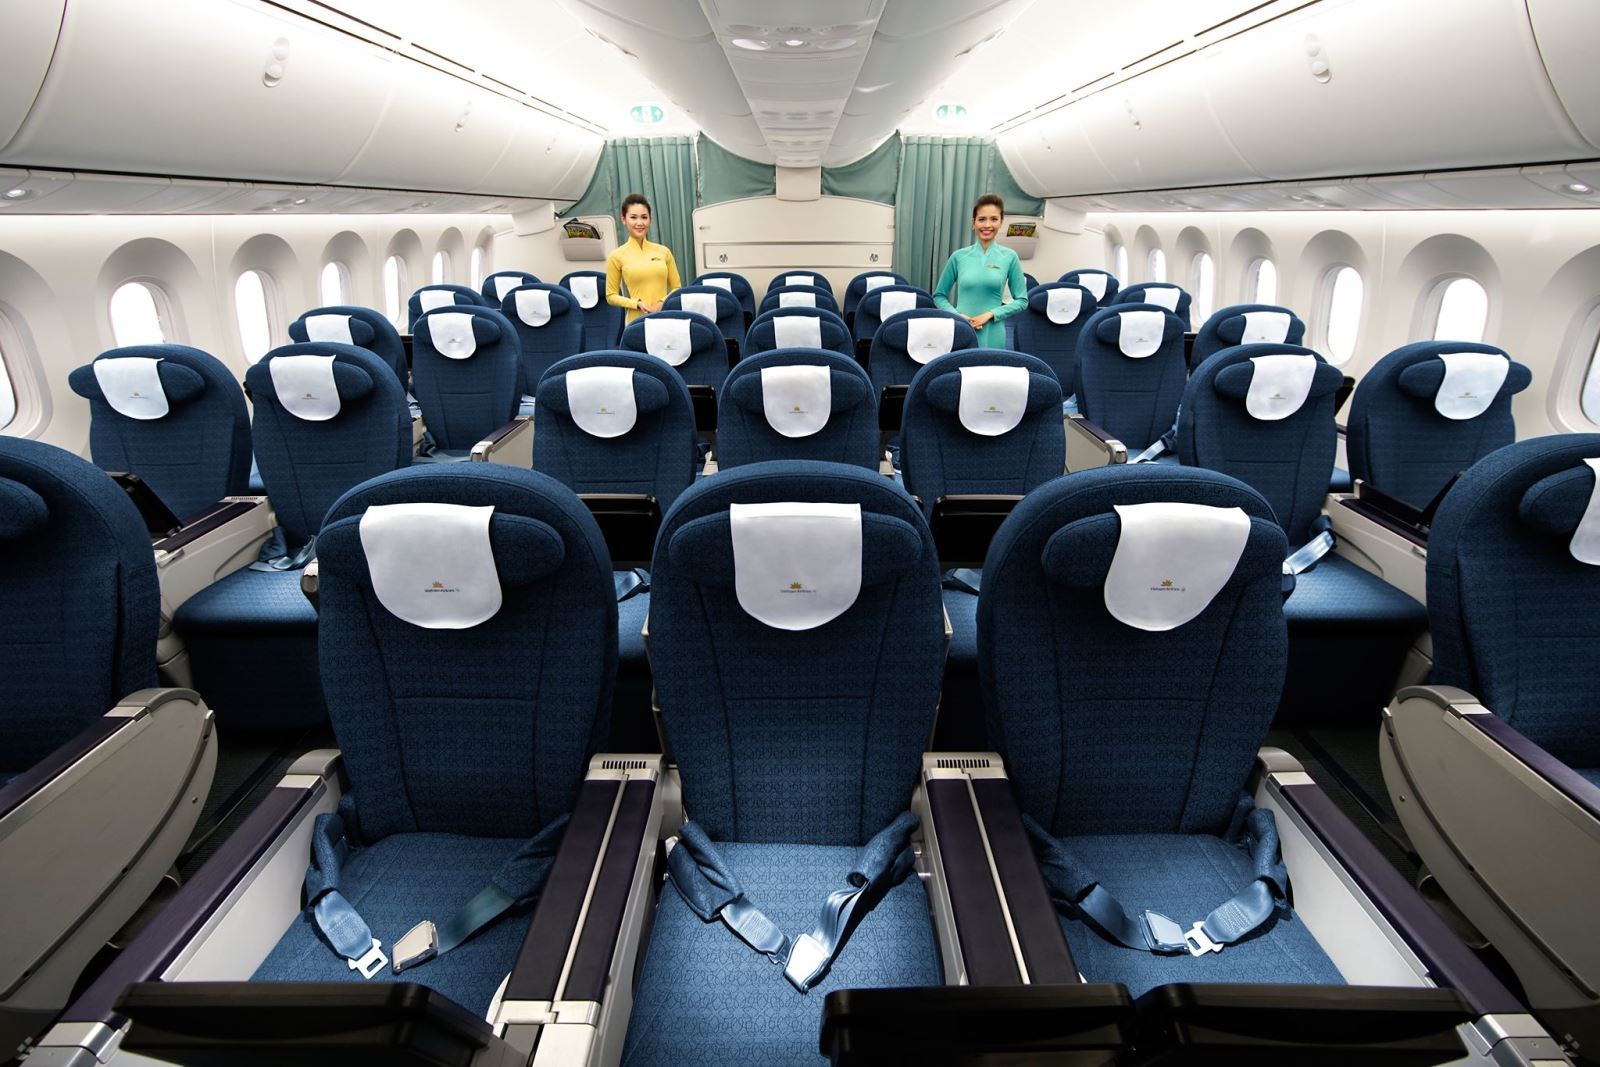 Vé phổ thông linh hoạt Vietnam Airlines là gì? Khoang vé phổ thông linh hoạt của Vietnam Airlines